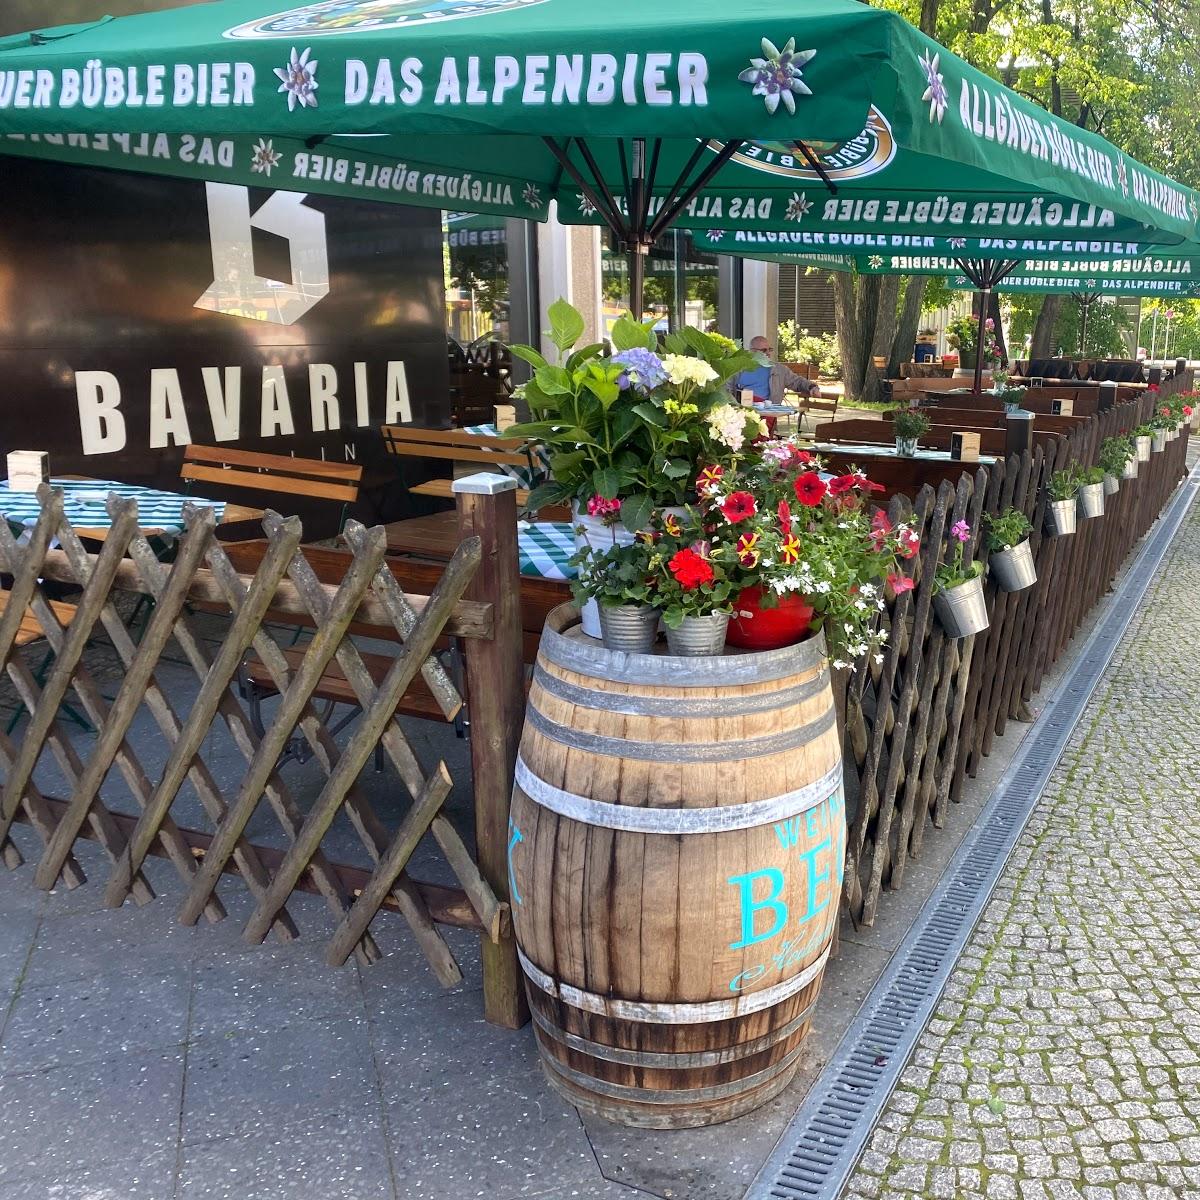 Restaurant "Bavaria" in Berlin